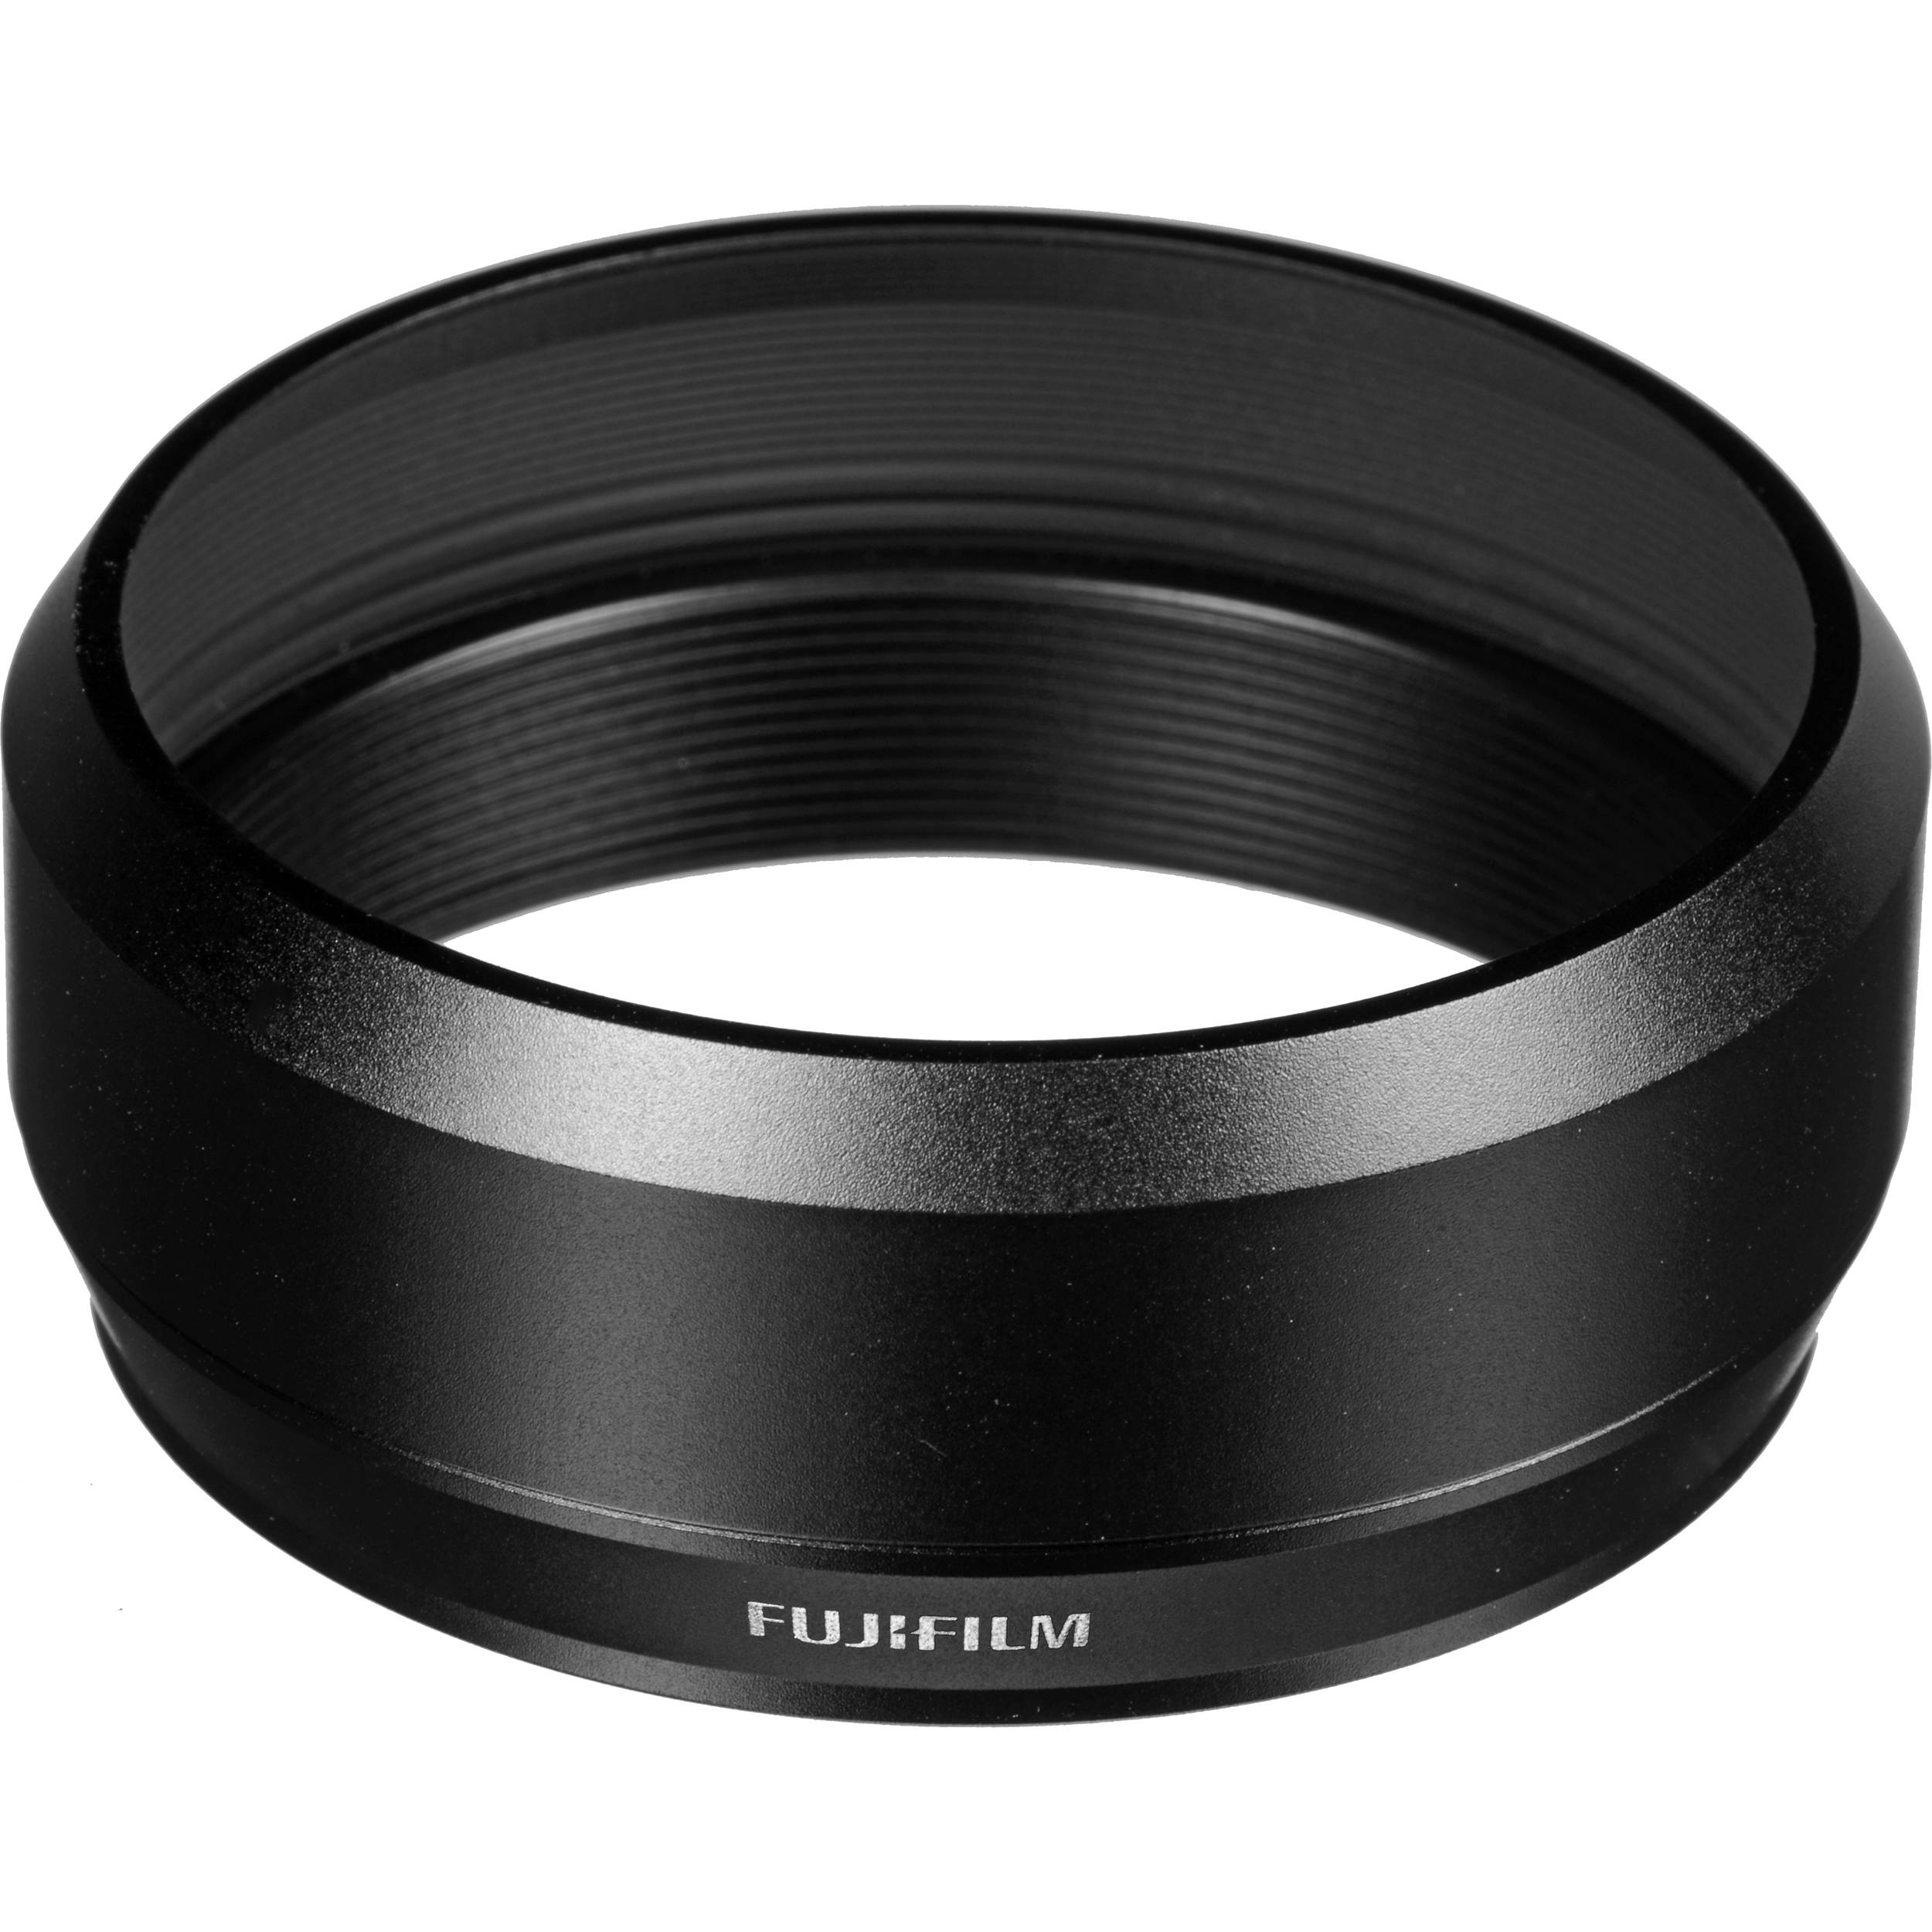 Fujifilm LHX70 Lens Hood for X70 Digital Camera (Black)